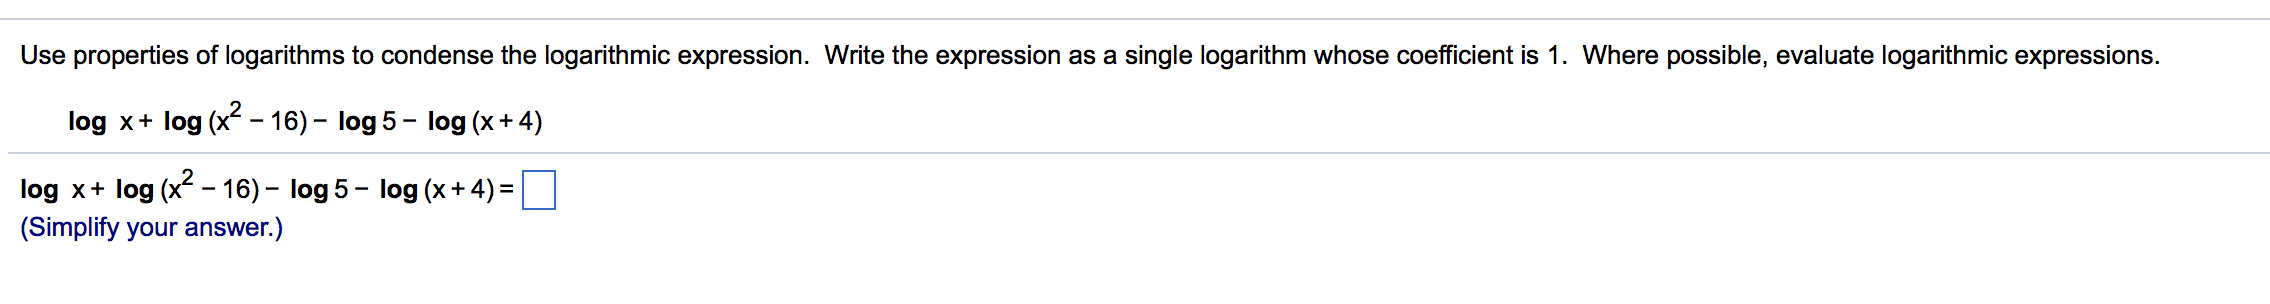 logarithmic condense calculator